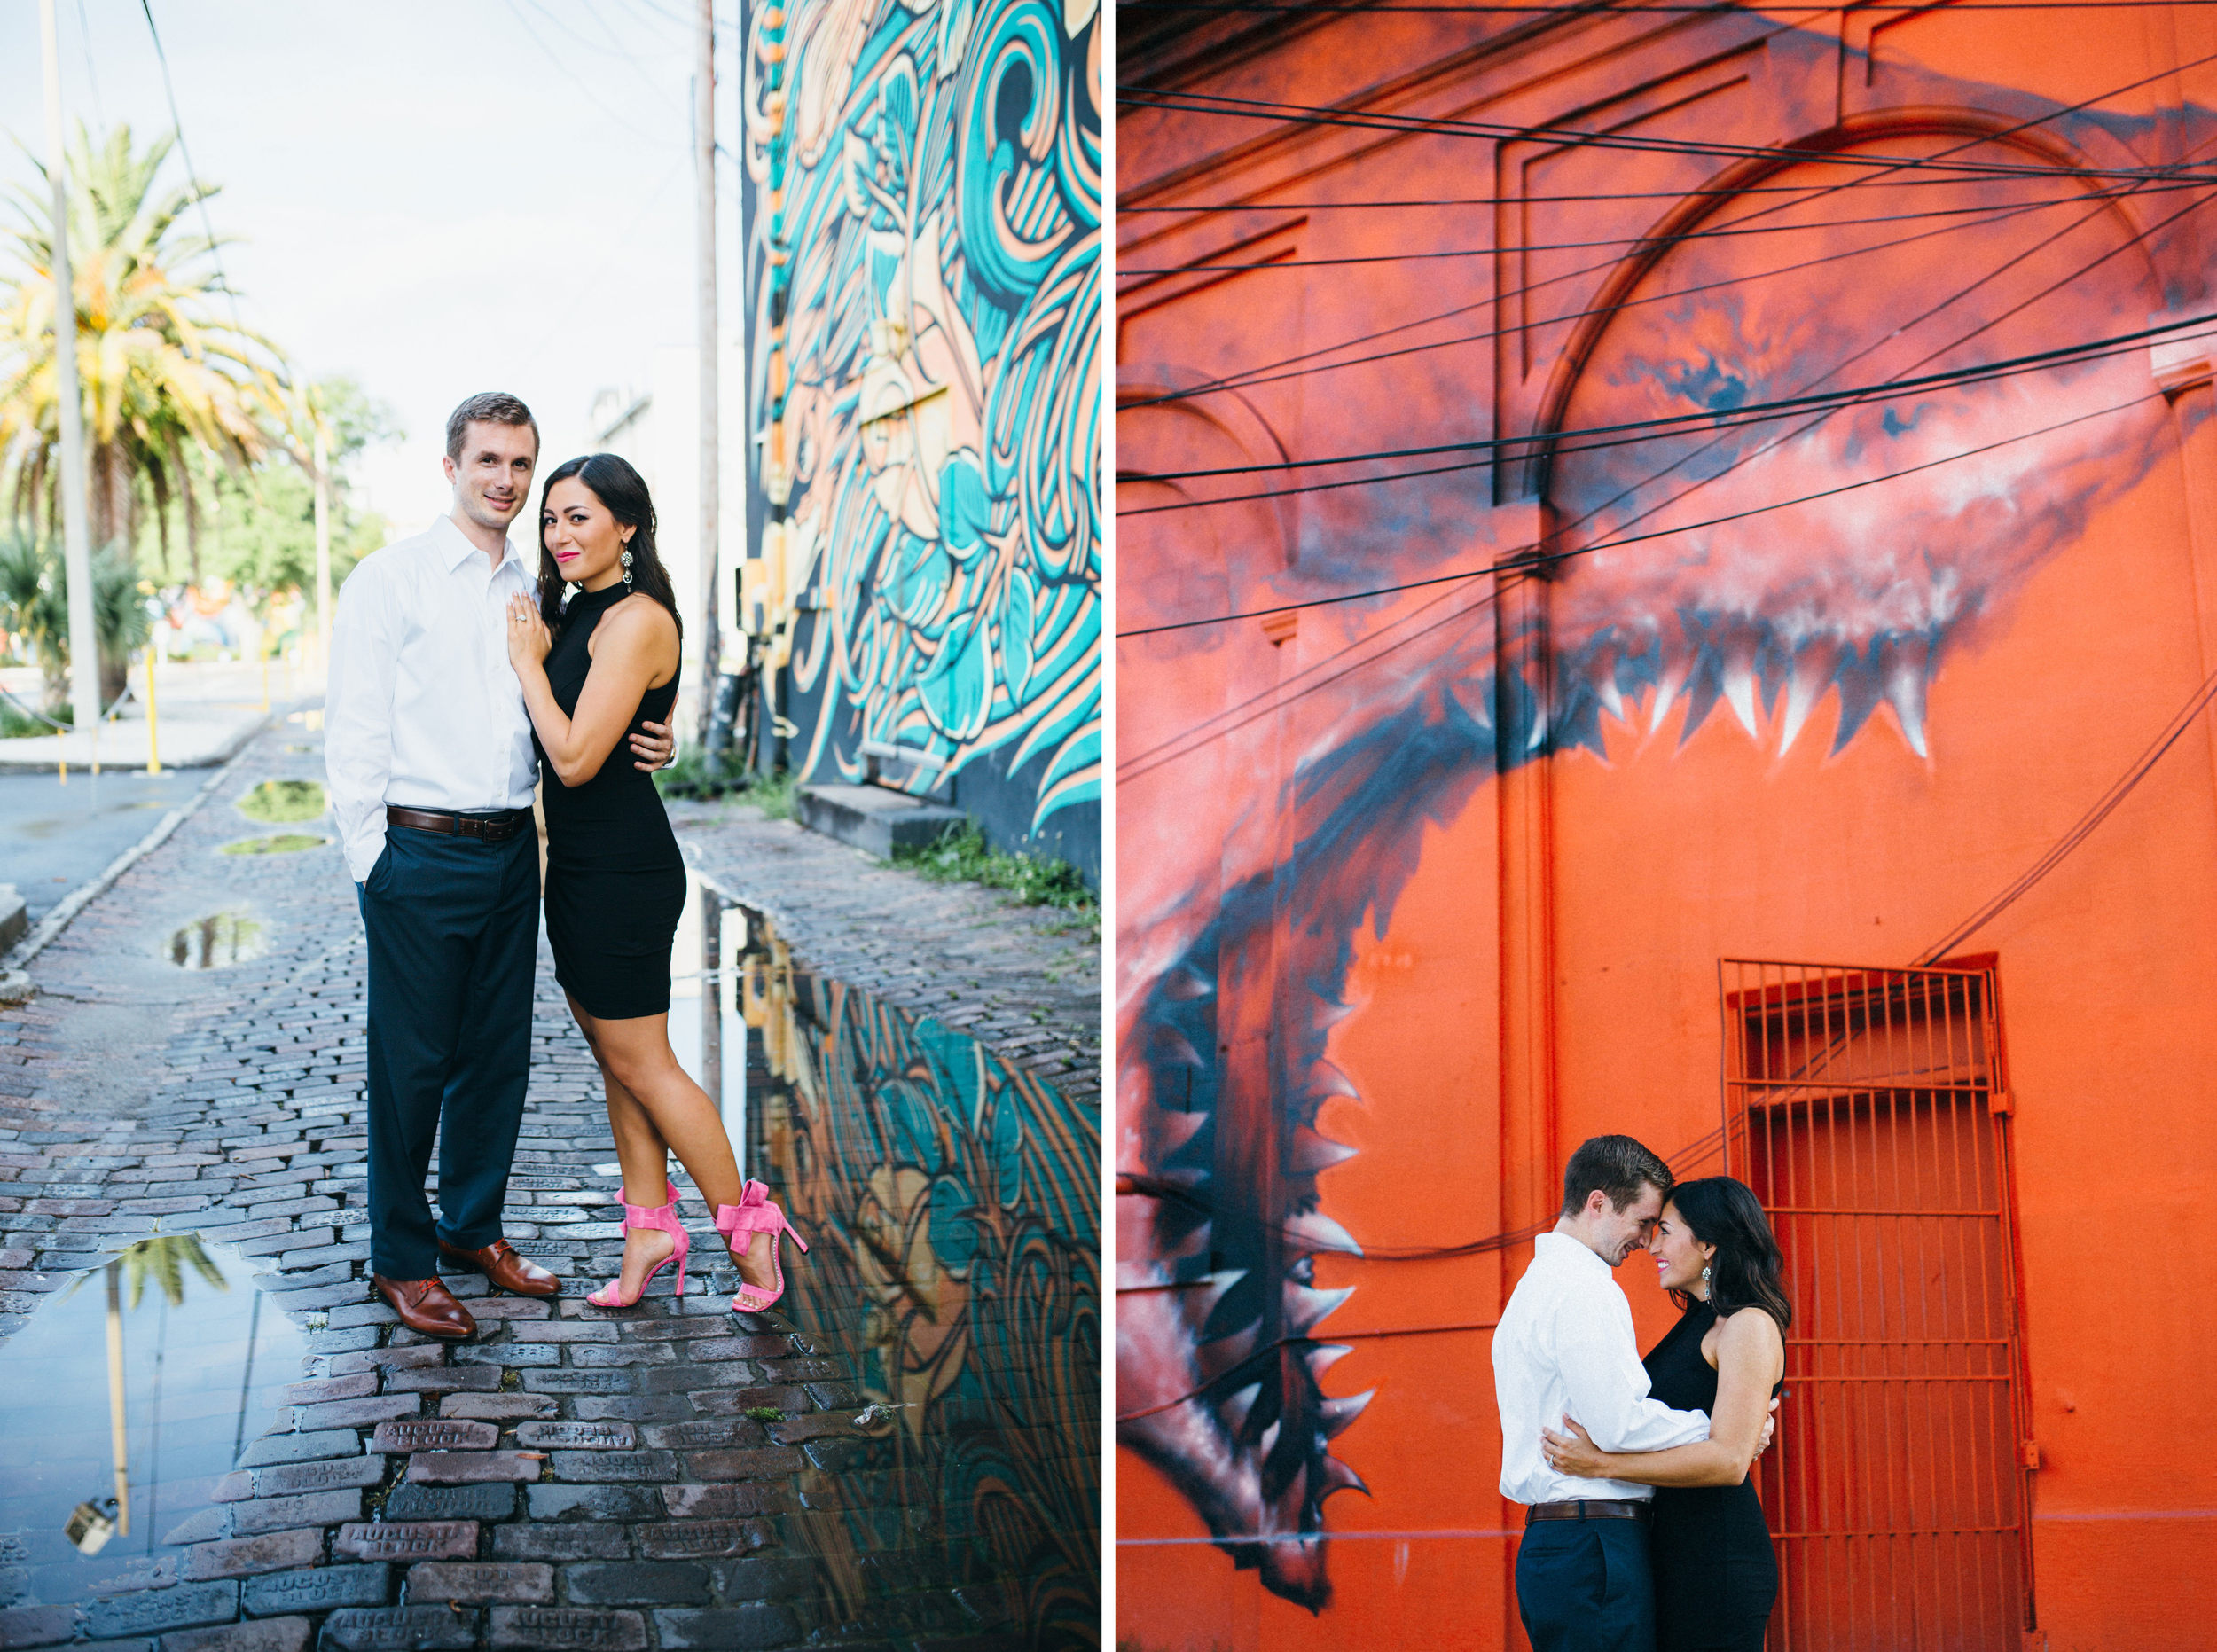 Priska & Russell | Engagement | Downtown St. Petersburg & Ft. De Soto, Florida | Benjamin Hewitt Photography